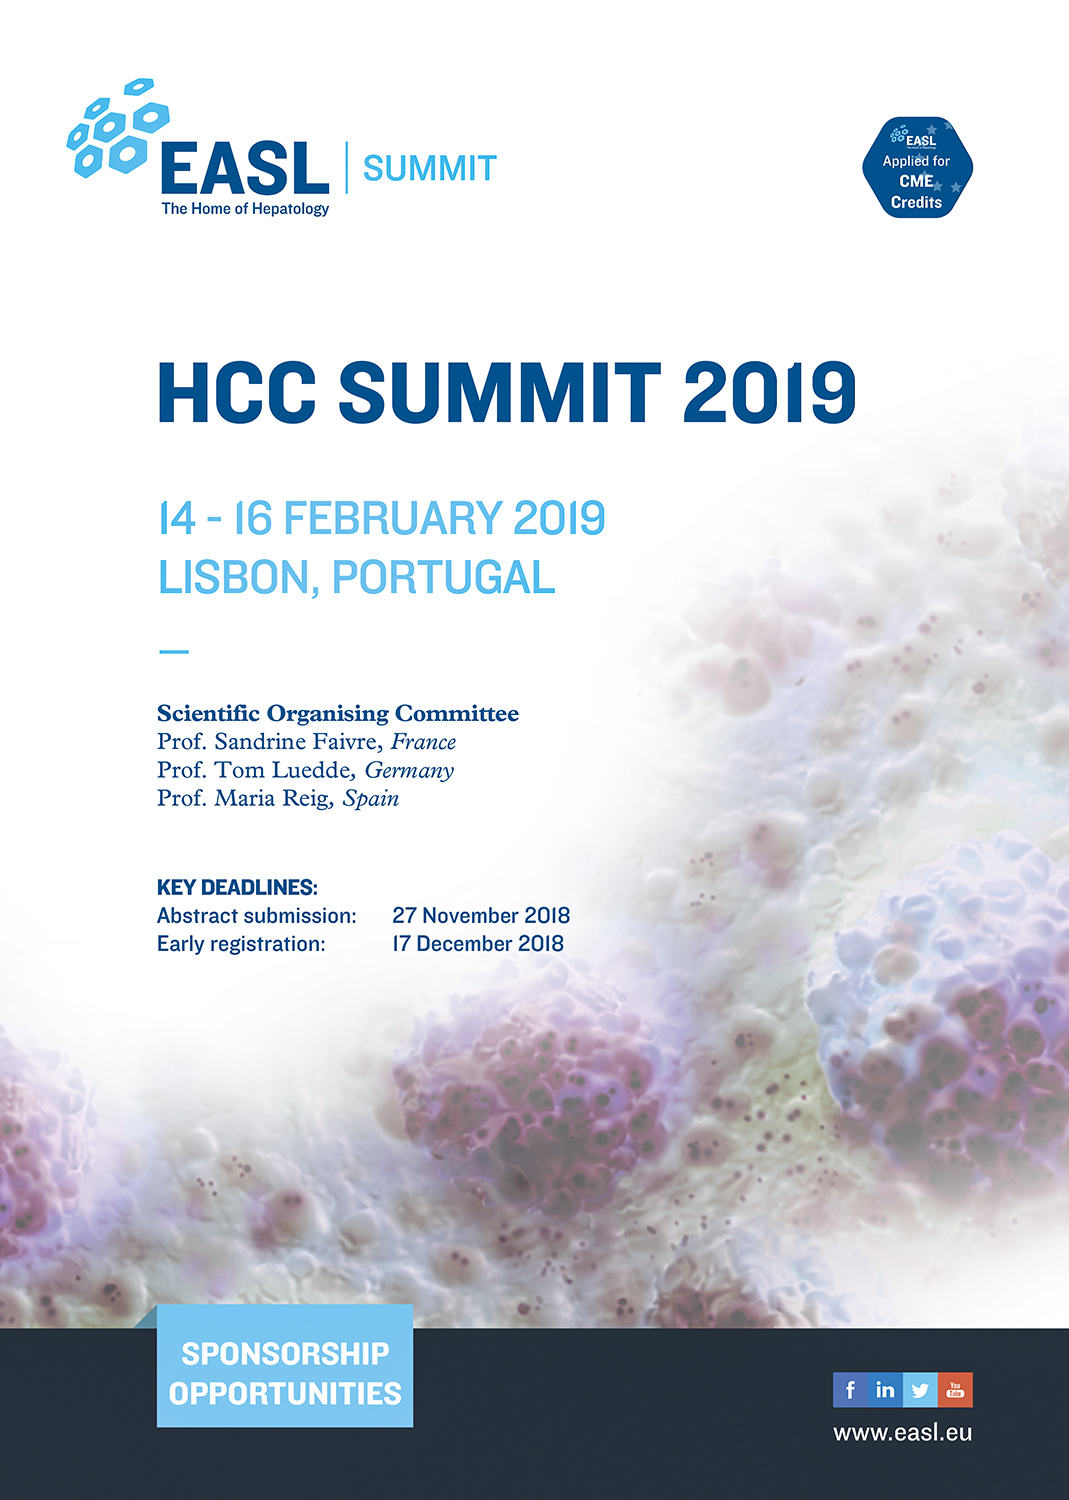 EASL HCC SUMMIT 2019, Lisbona, 14-16 febbraio